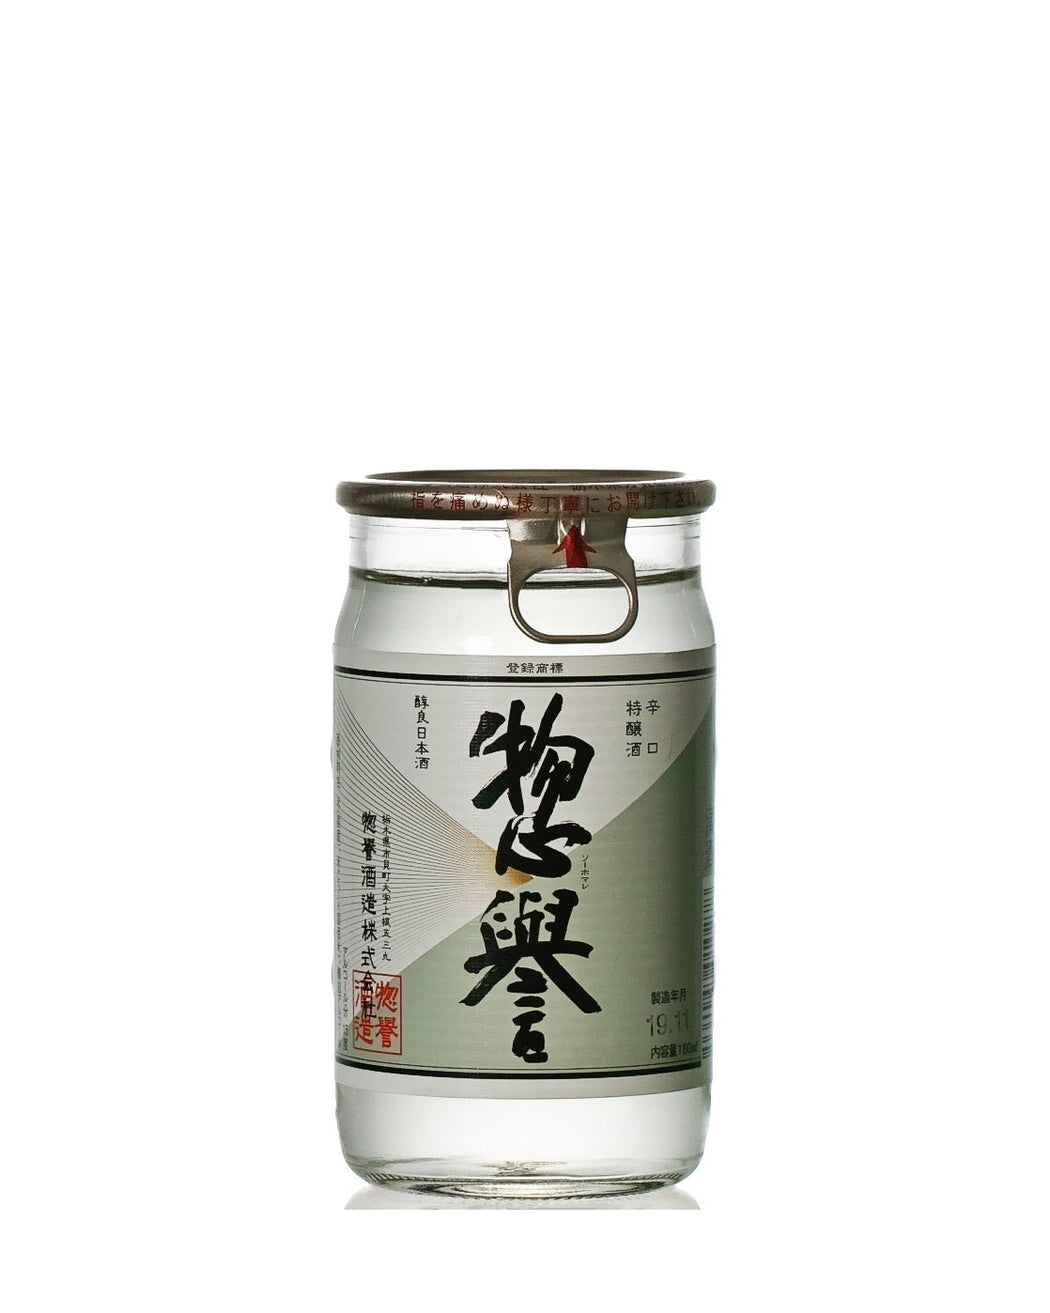 Sake tii den tørre side. Karakuchi Kappu - kop sake - Manaka